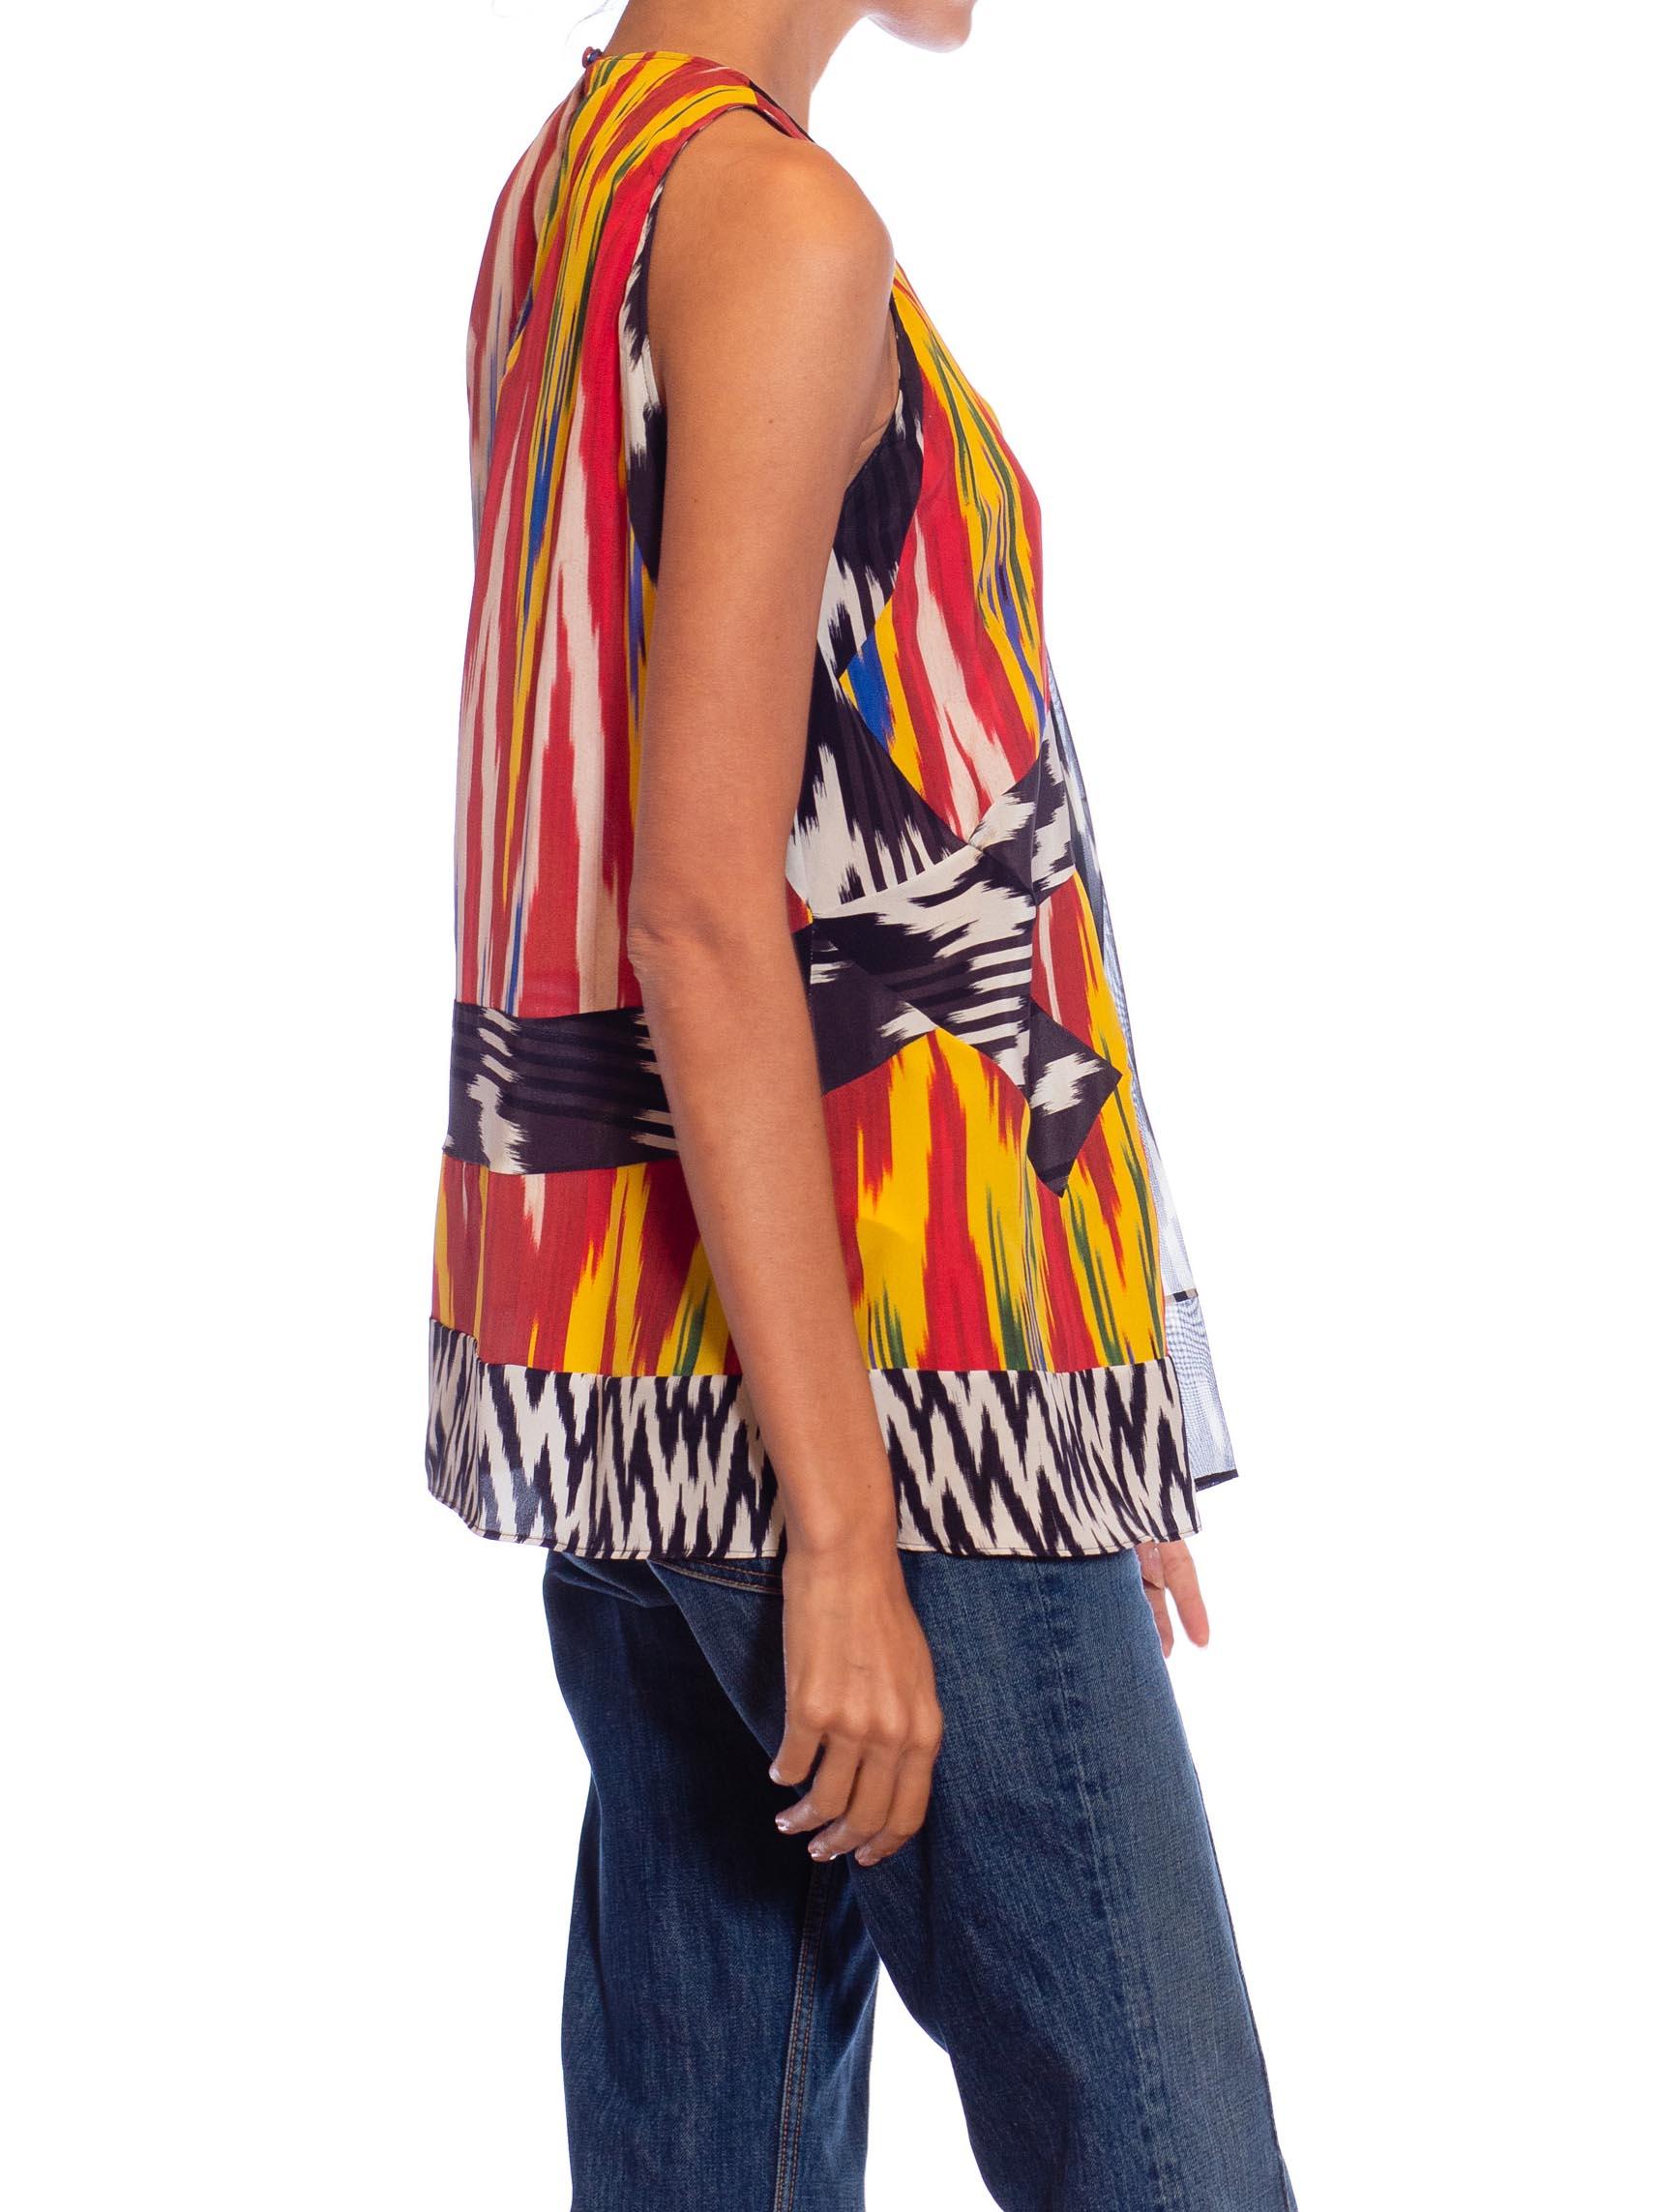 Women's 2010S ALTUZARRA Silk Ikat Print Sleeveless Top For Sale